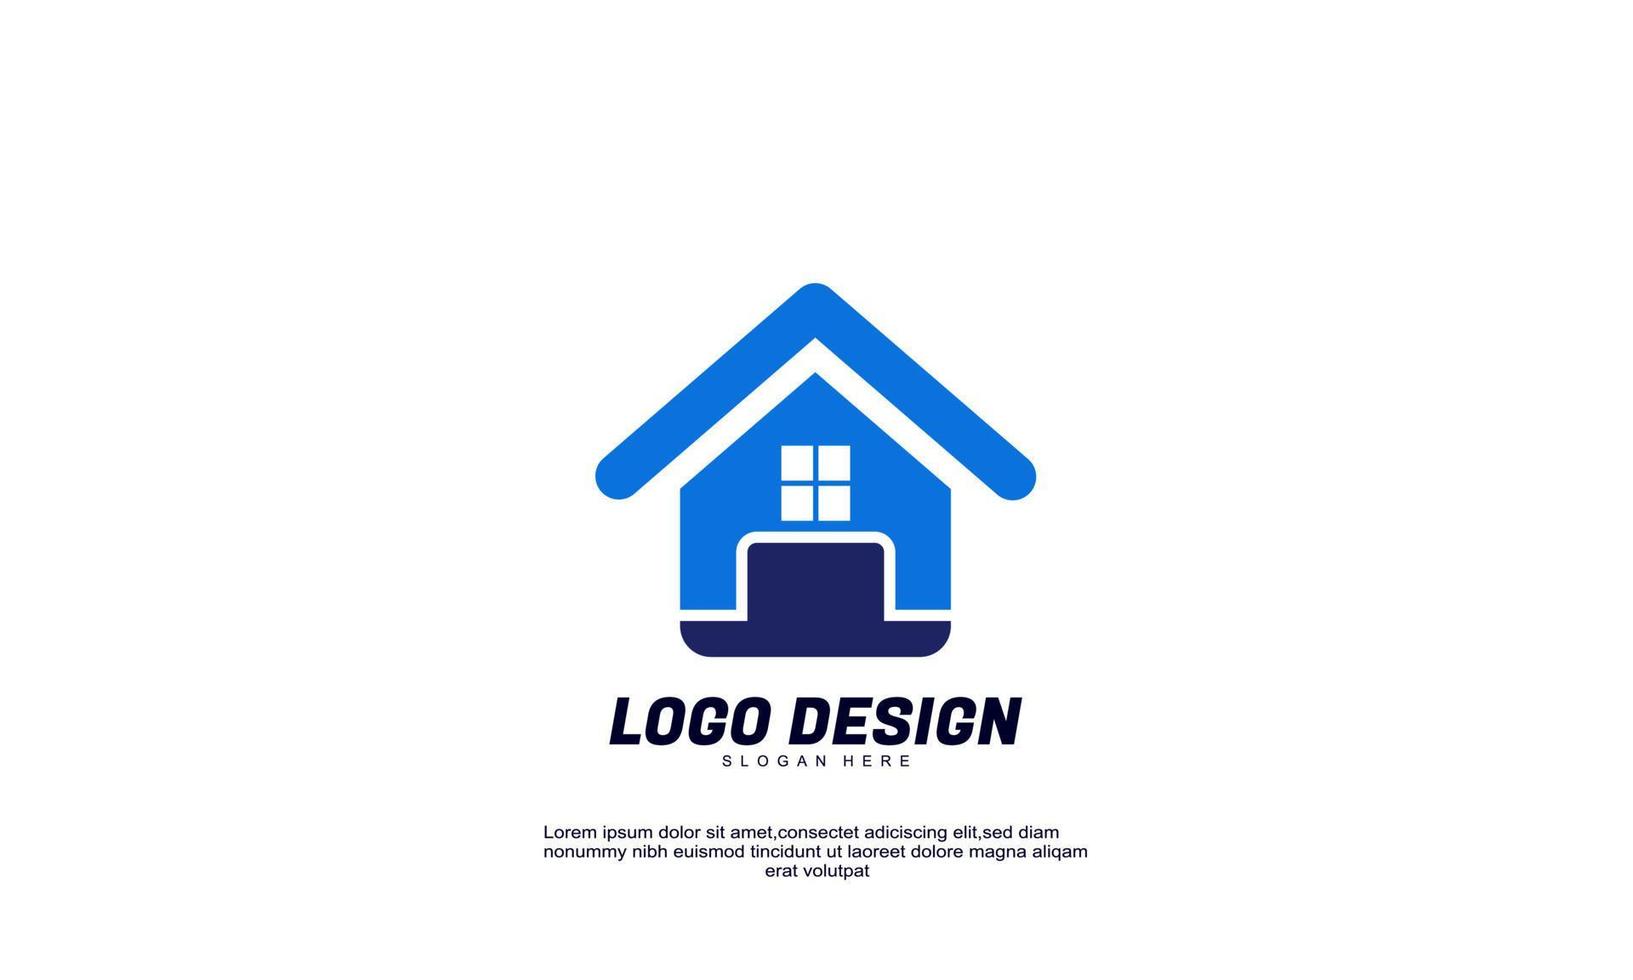 abstract creative idea inspiration house logo for business design template vector